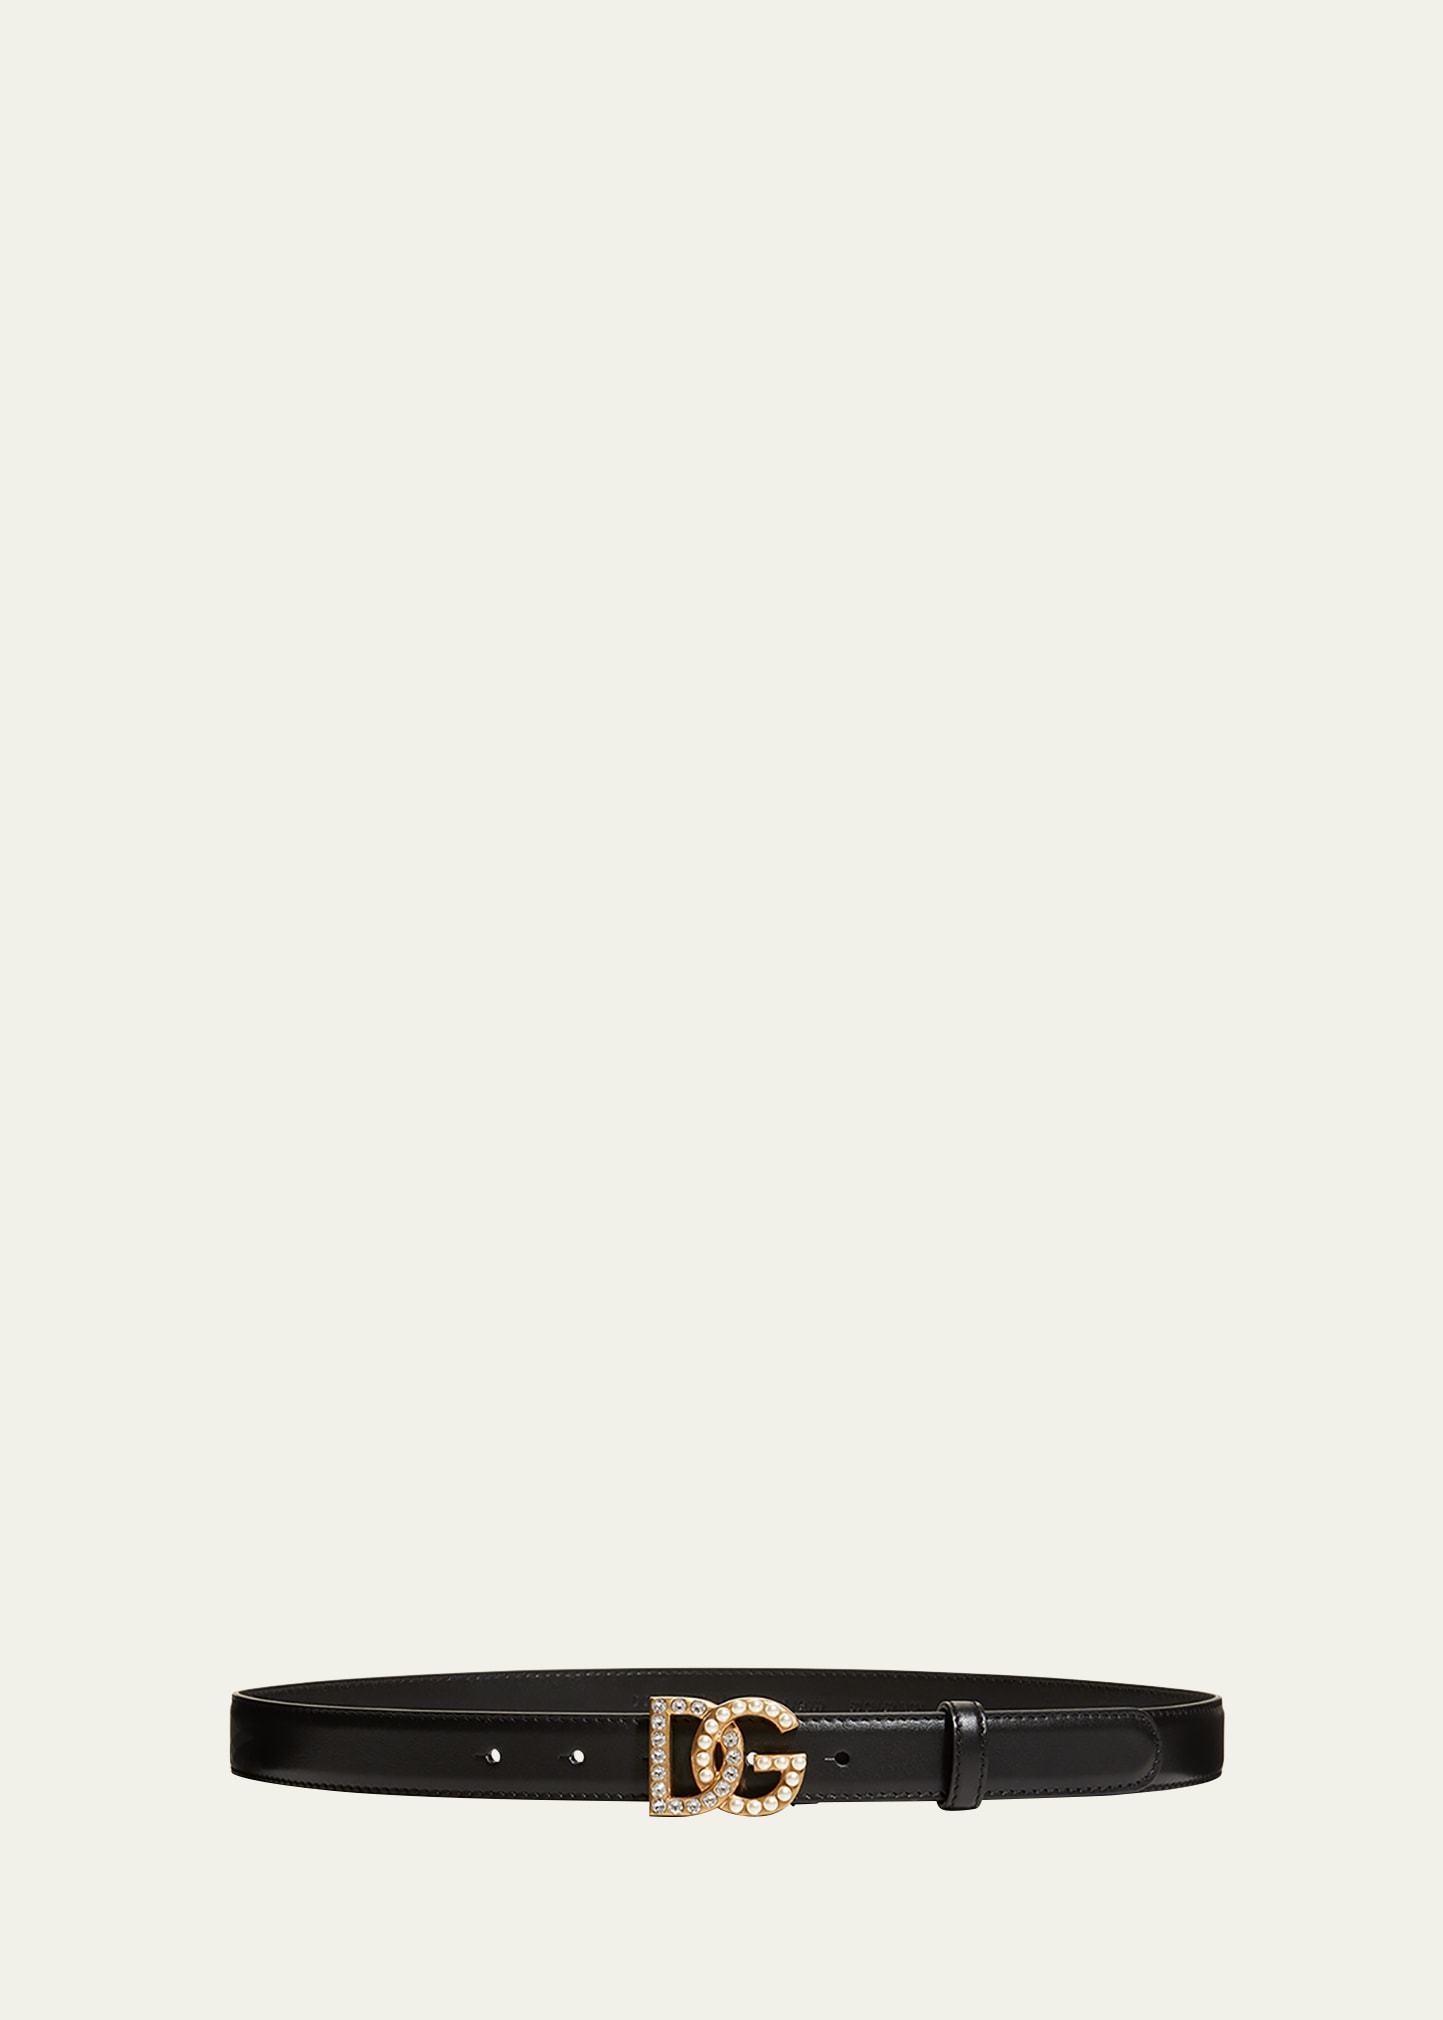 Dolce & Gabbana Dg Swarovski Crystal & Pearl Leather Belt In Black / Gold